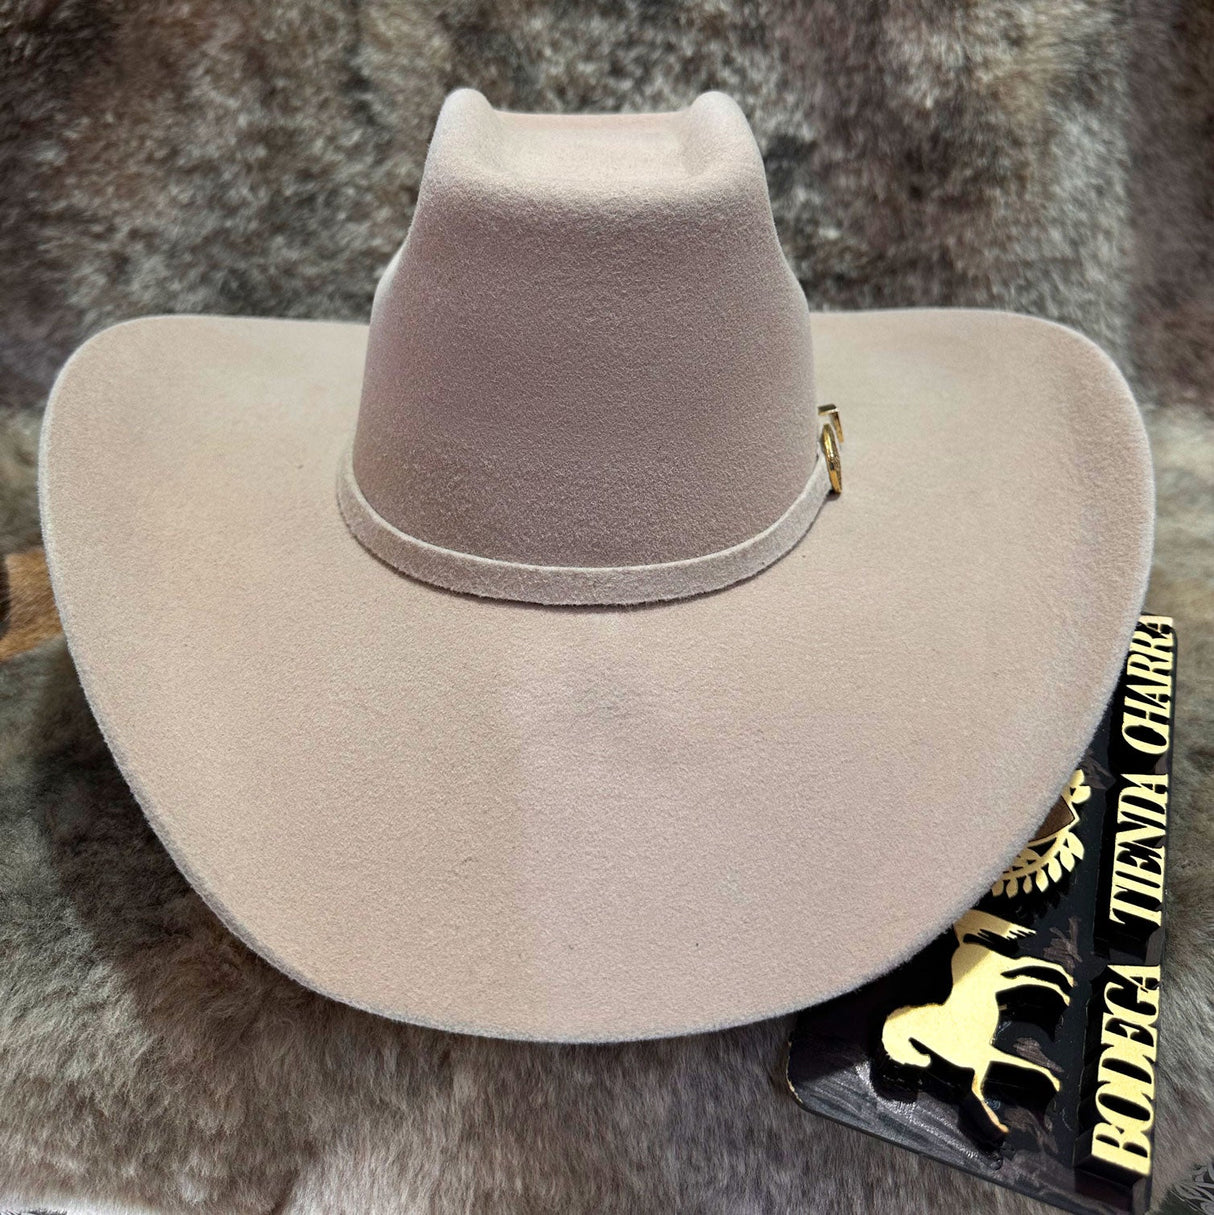 Texana modelo 8 Segundos (color beige) - Tiendacharra.com - Bodega Tienda Charra